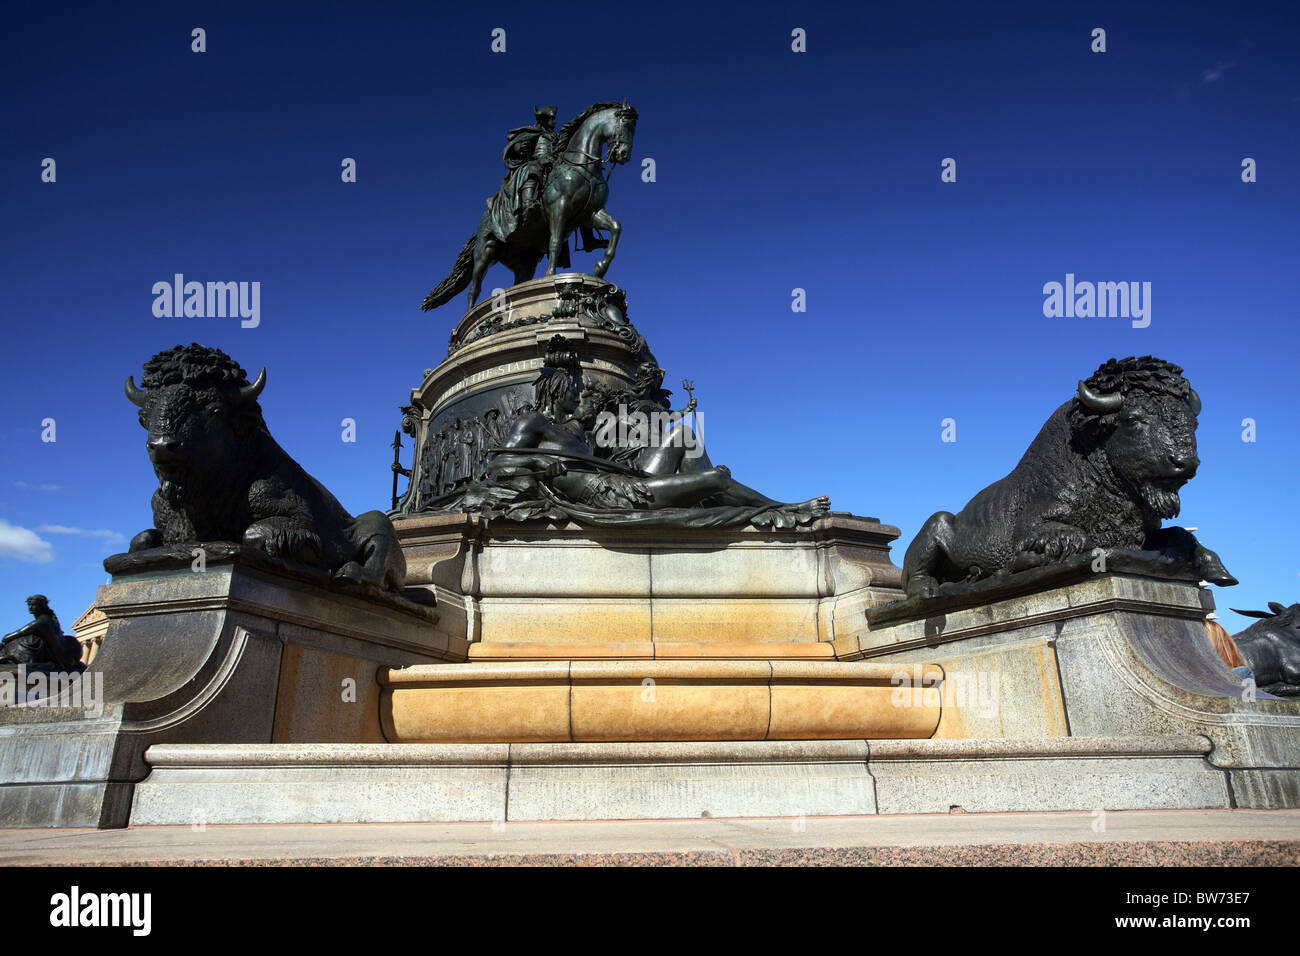 The George Washington Monument in Eakins Oval, Philadelphia, USA Stock Photo